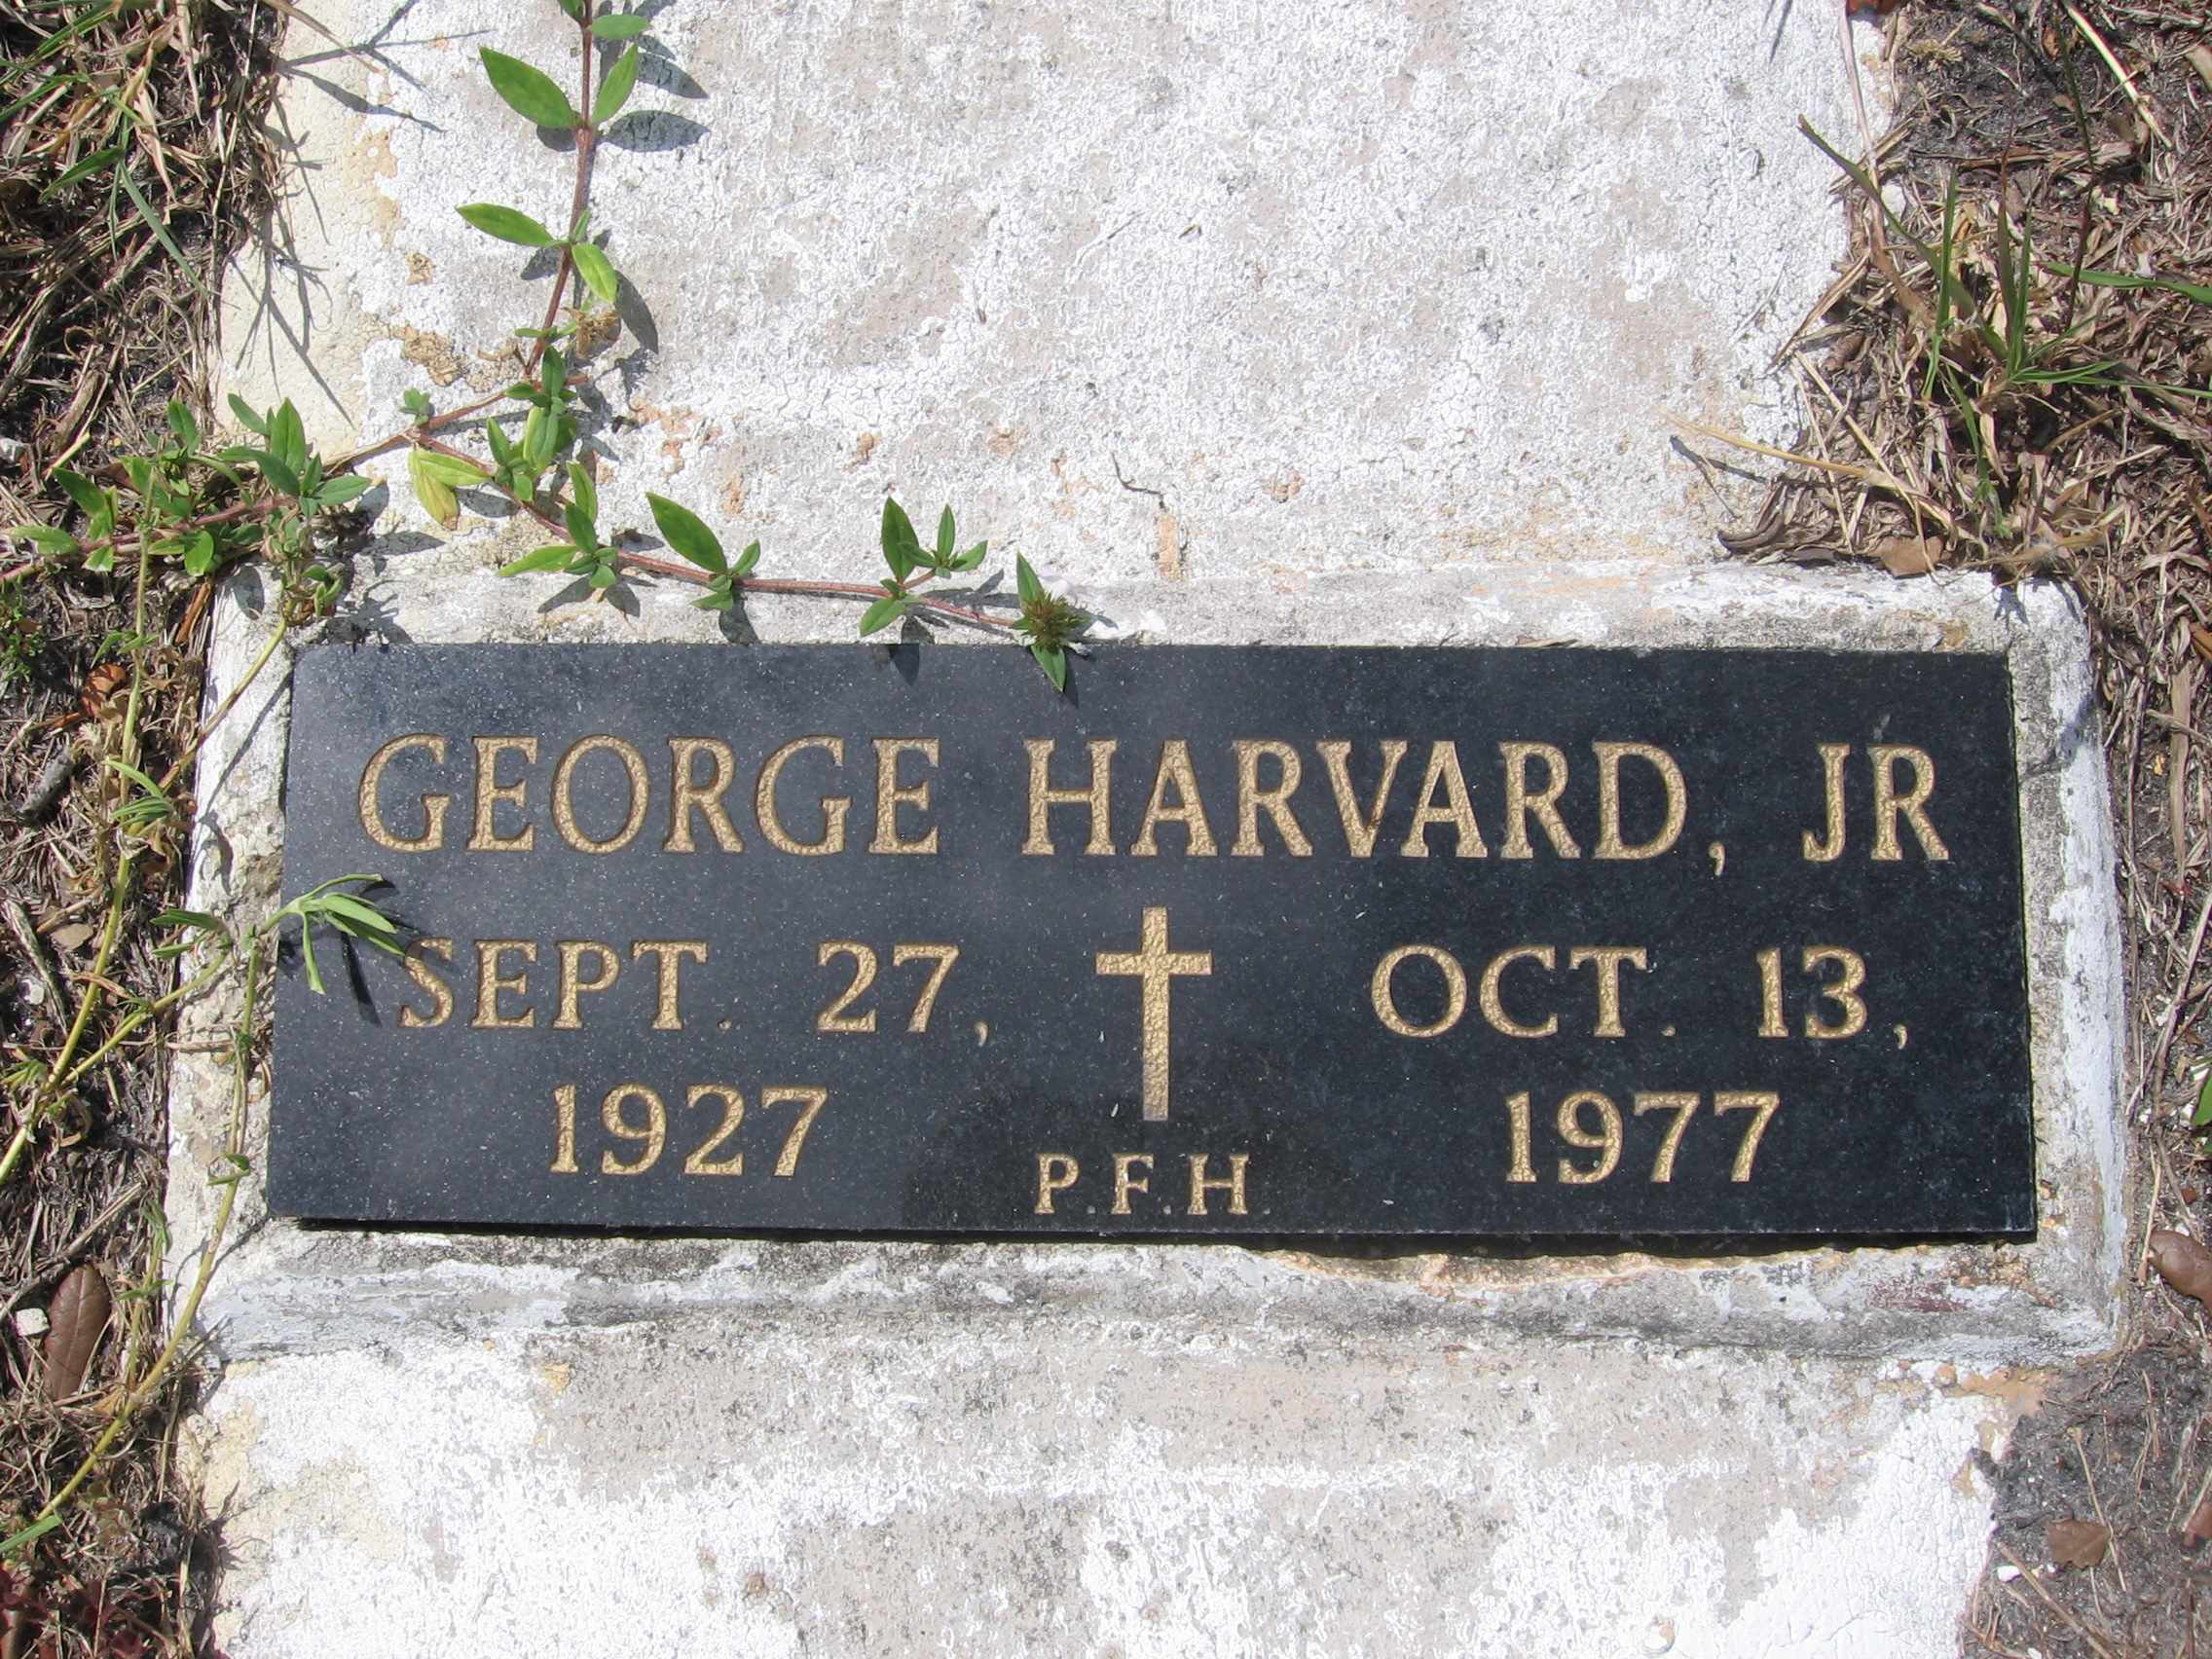 George Harvard, Jr